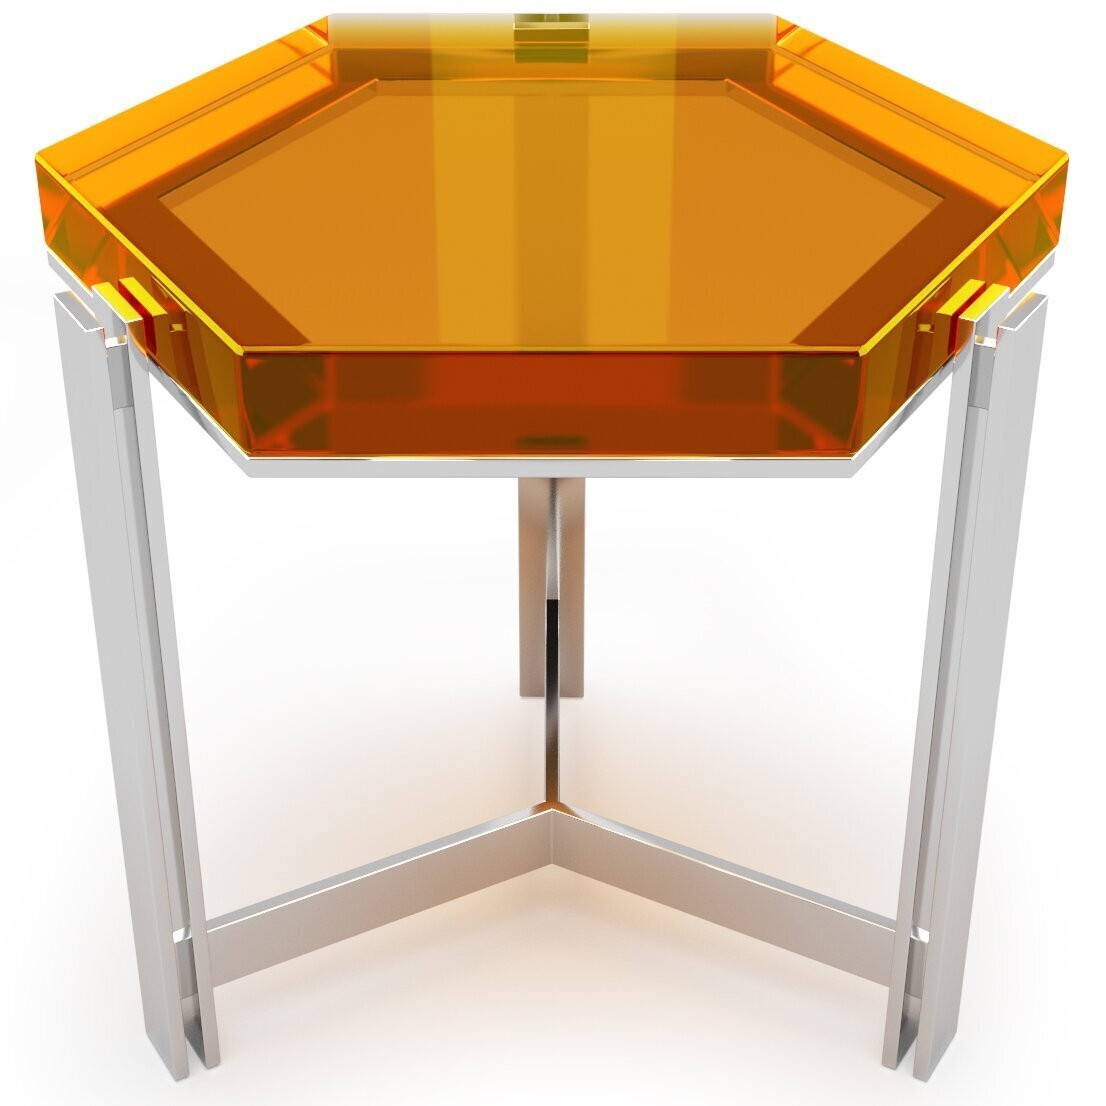 Hexagonal Orange Coffee Table